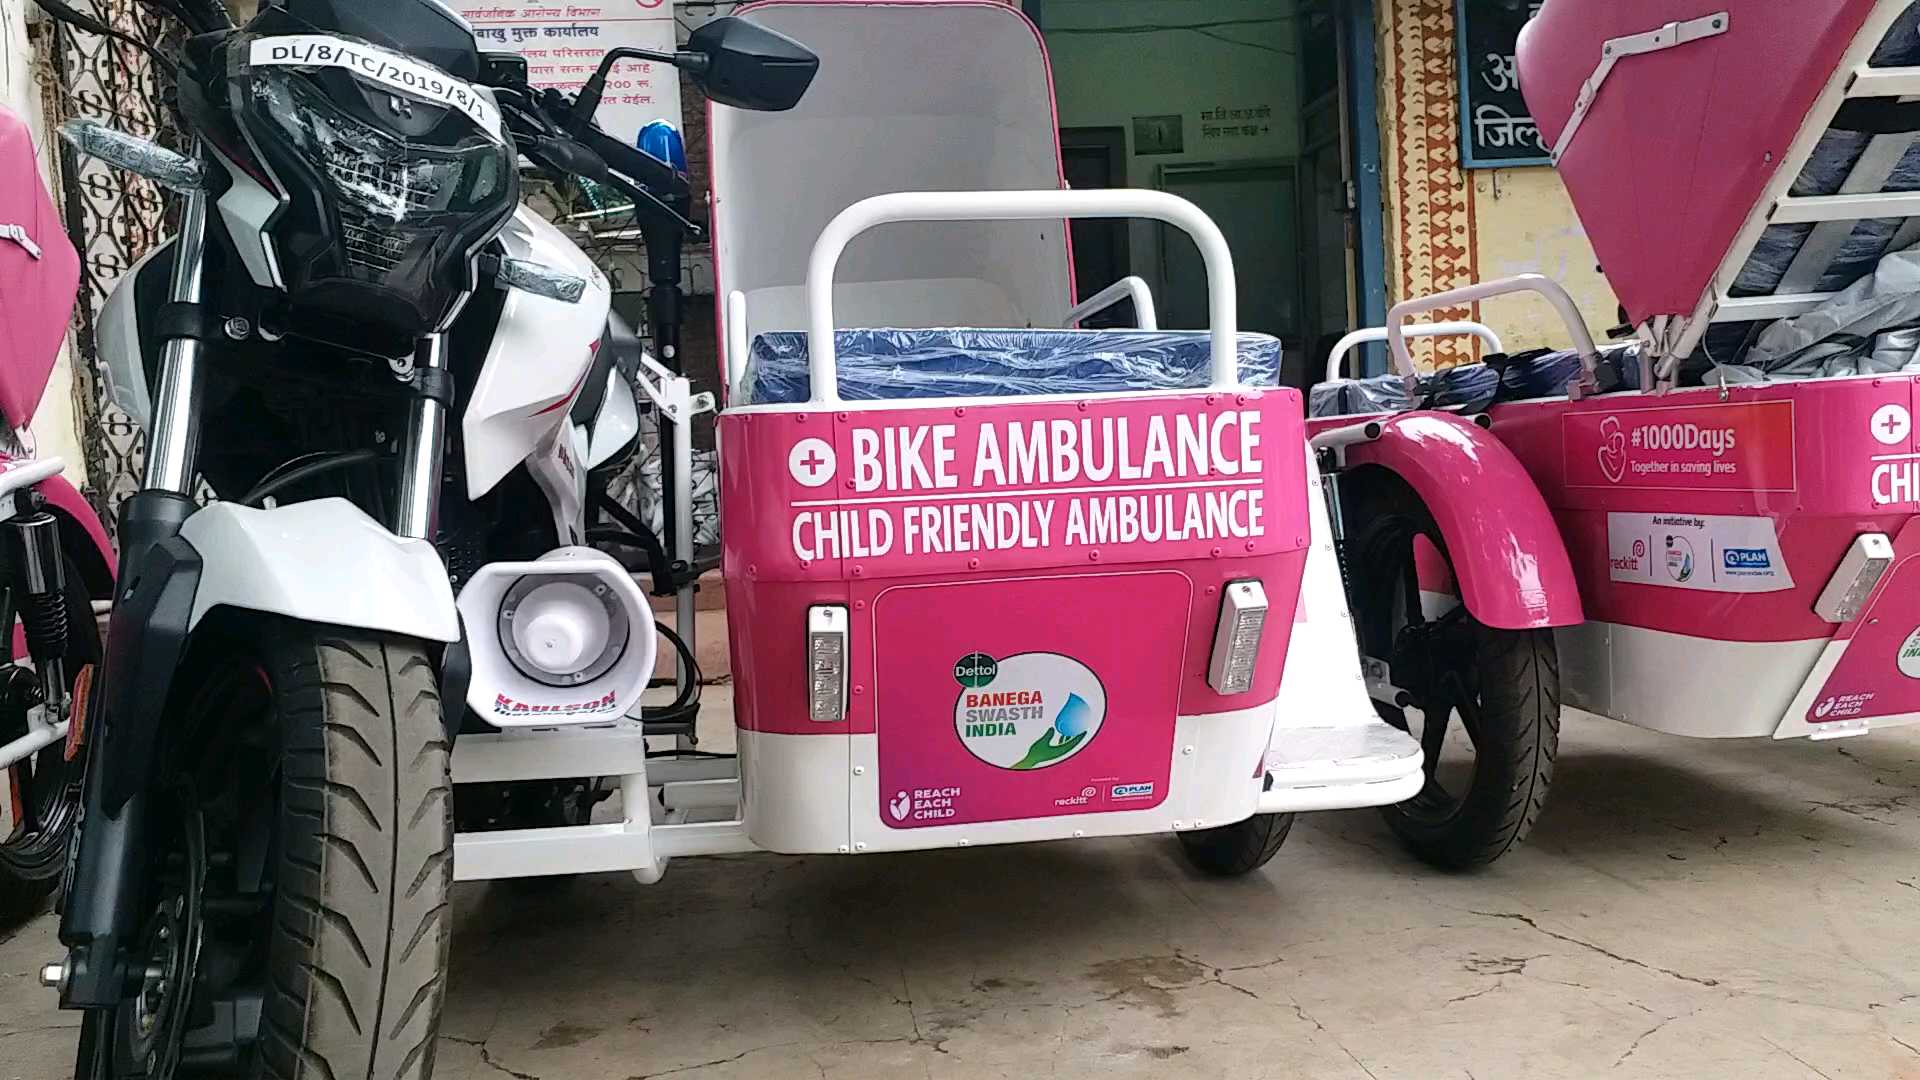 Bike ambulance